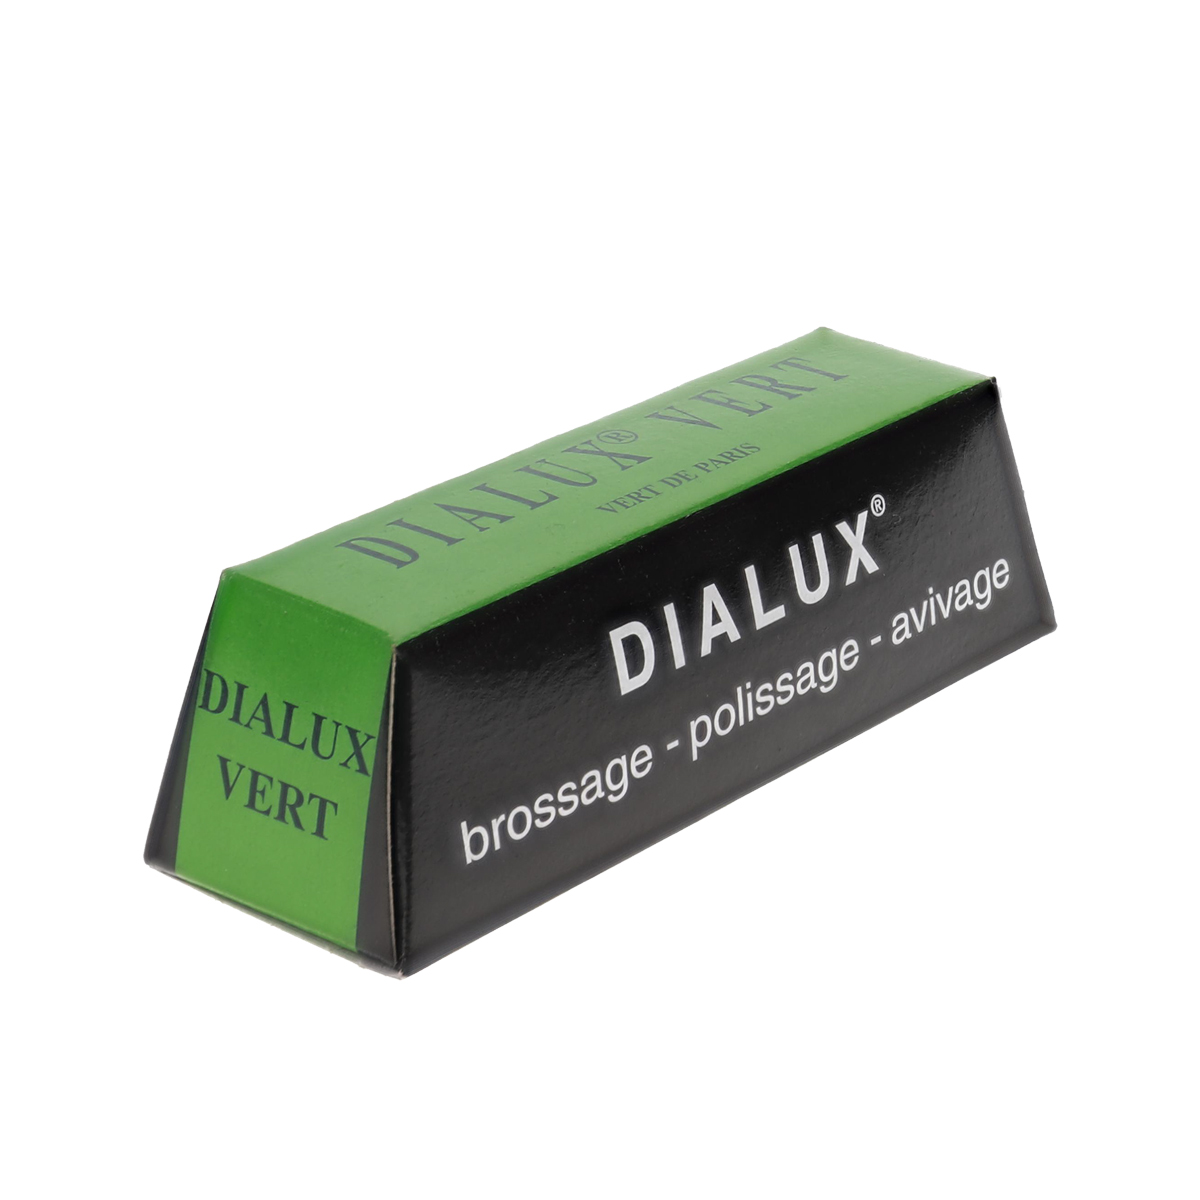 Dialux polishing paste green